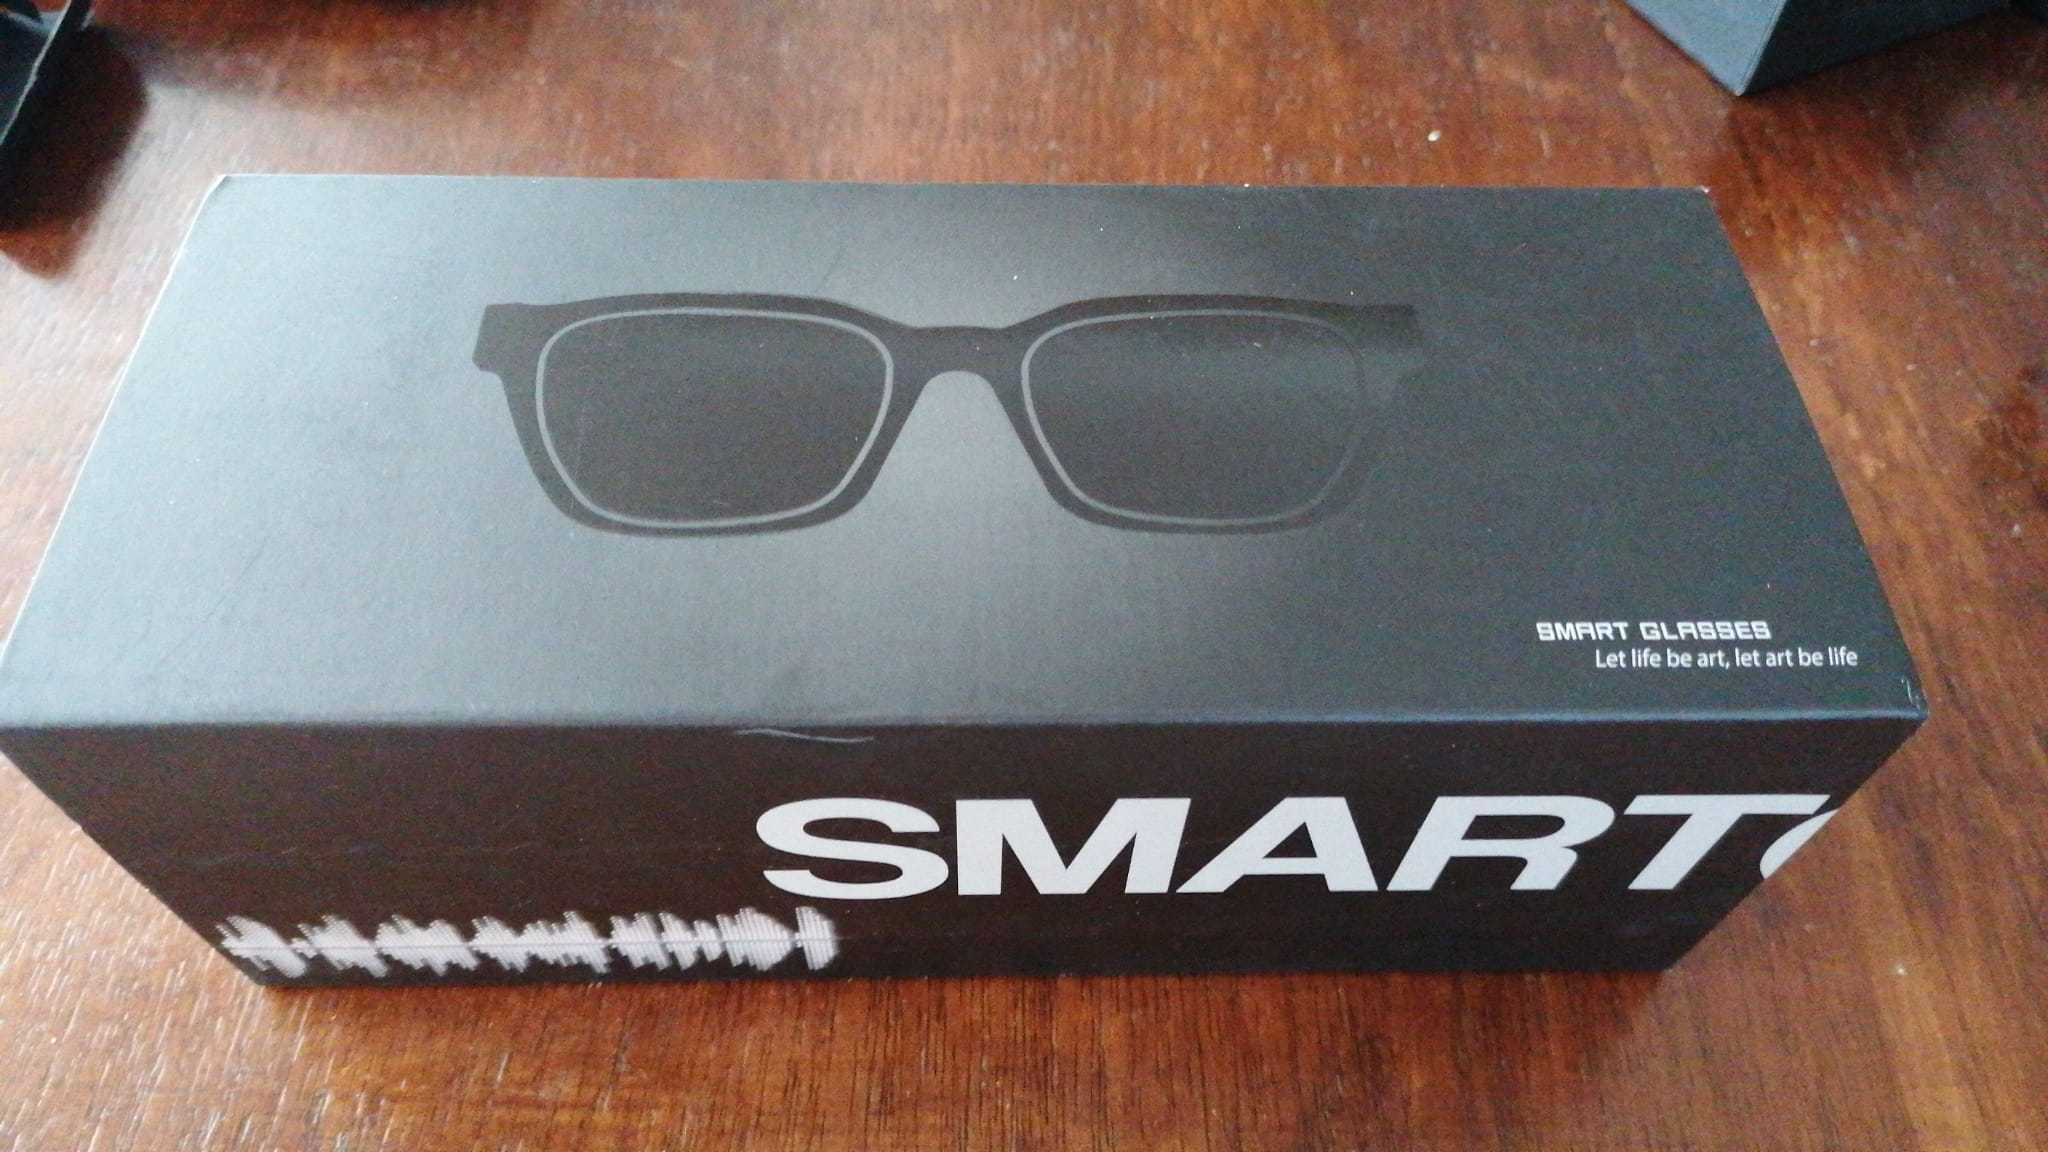 Ochelari smart audio glasses